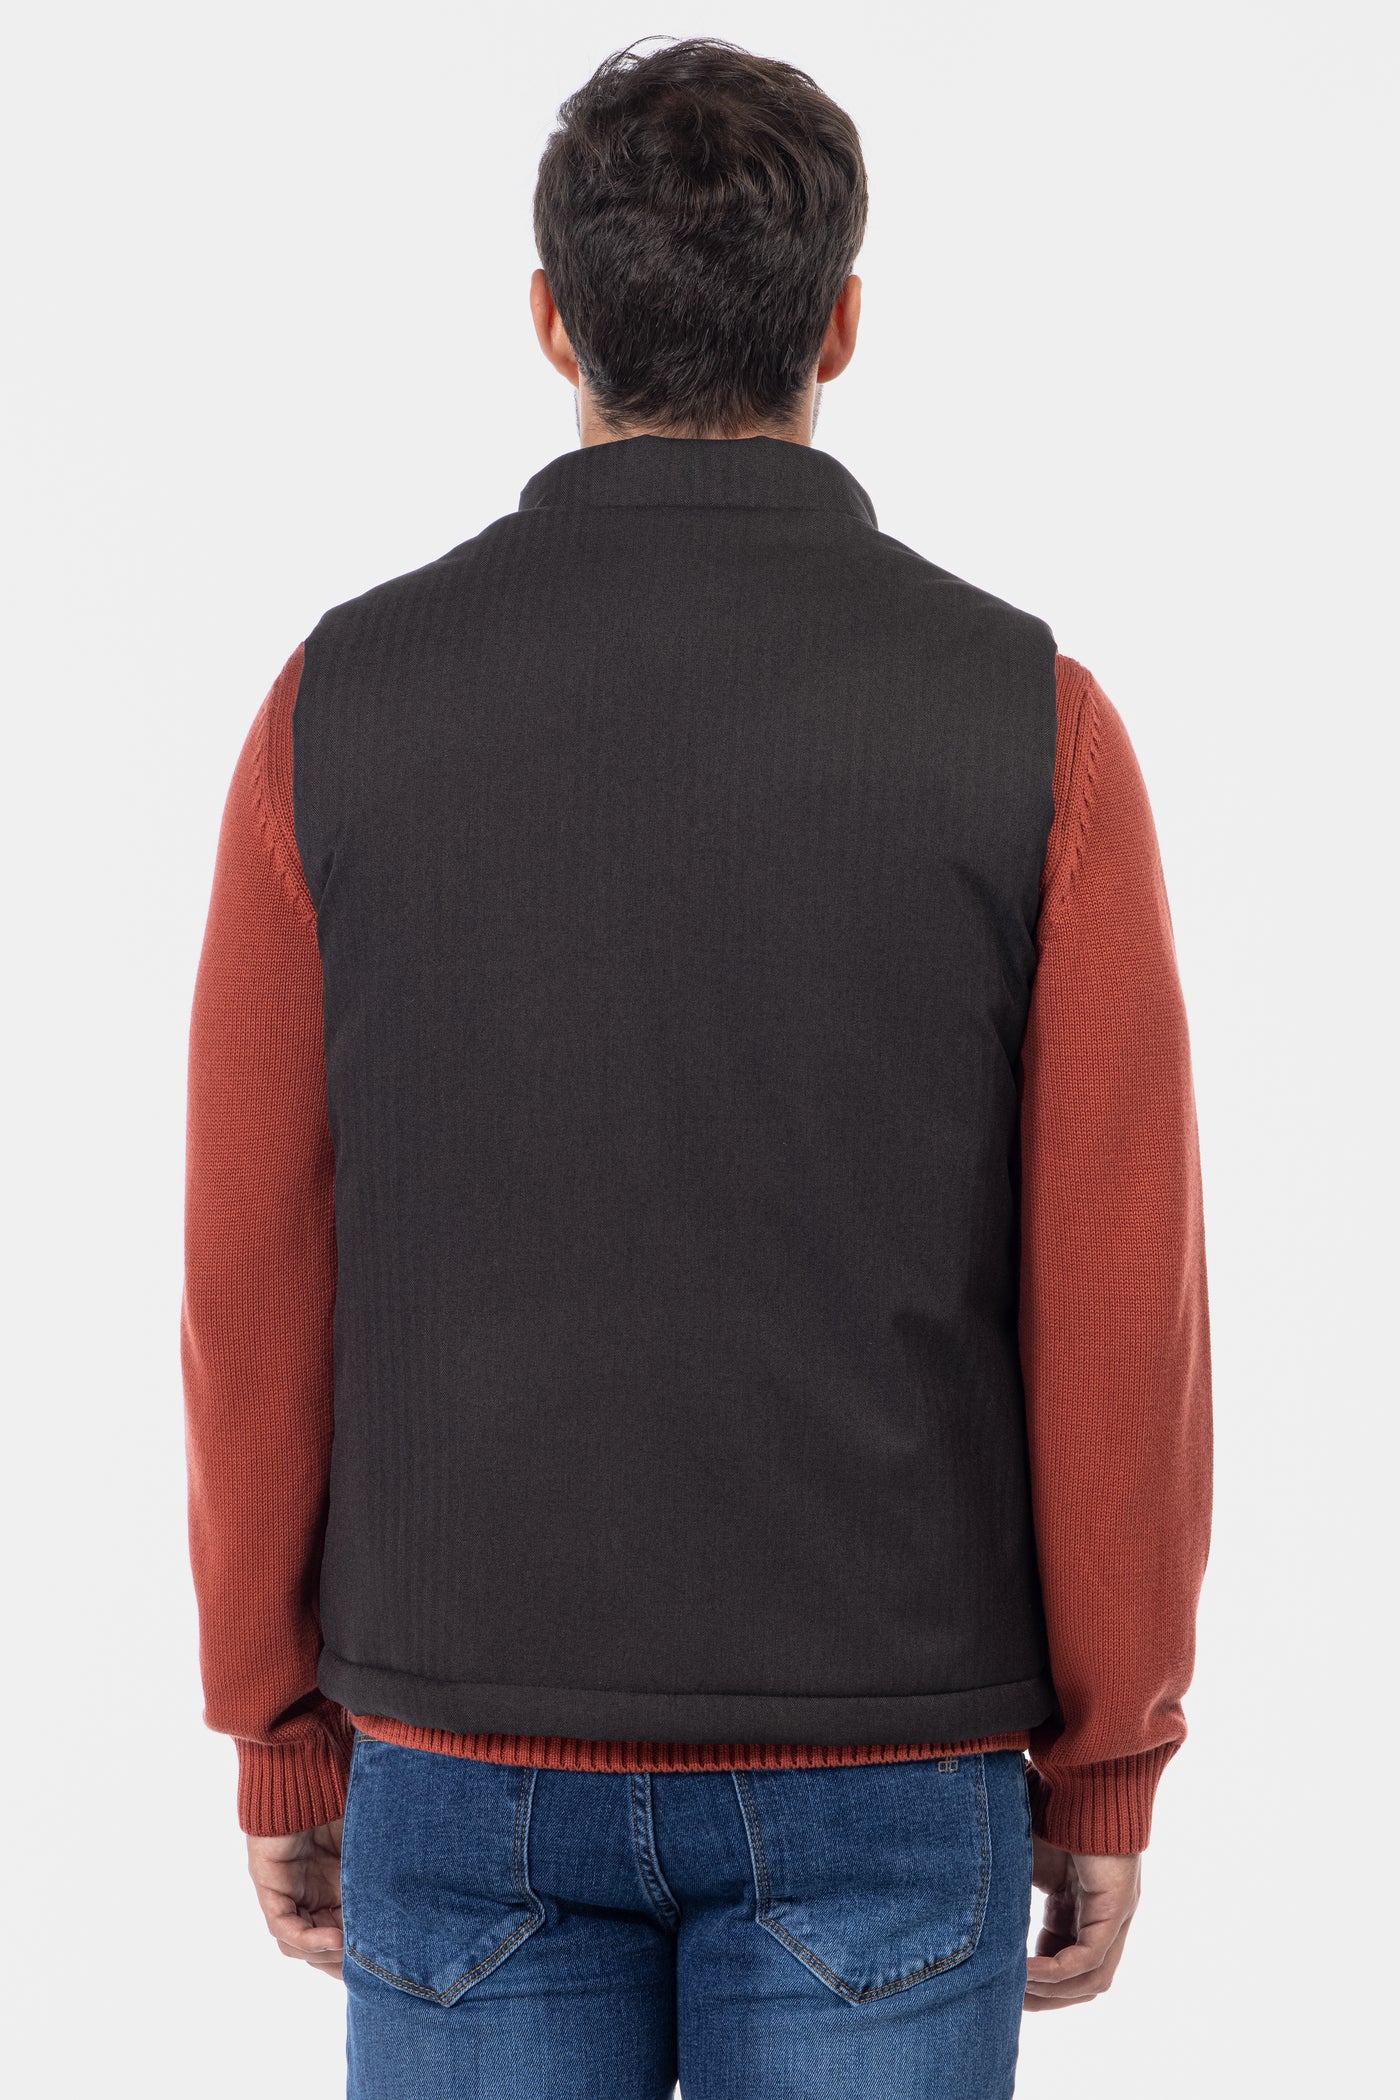 Waterproof Dark Brown Vest Sweater